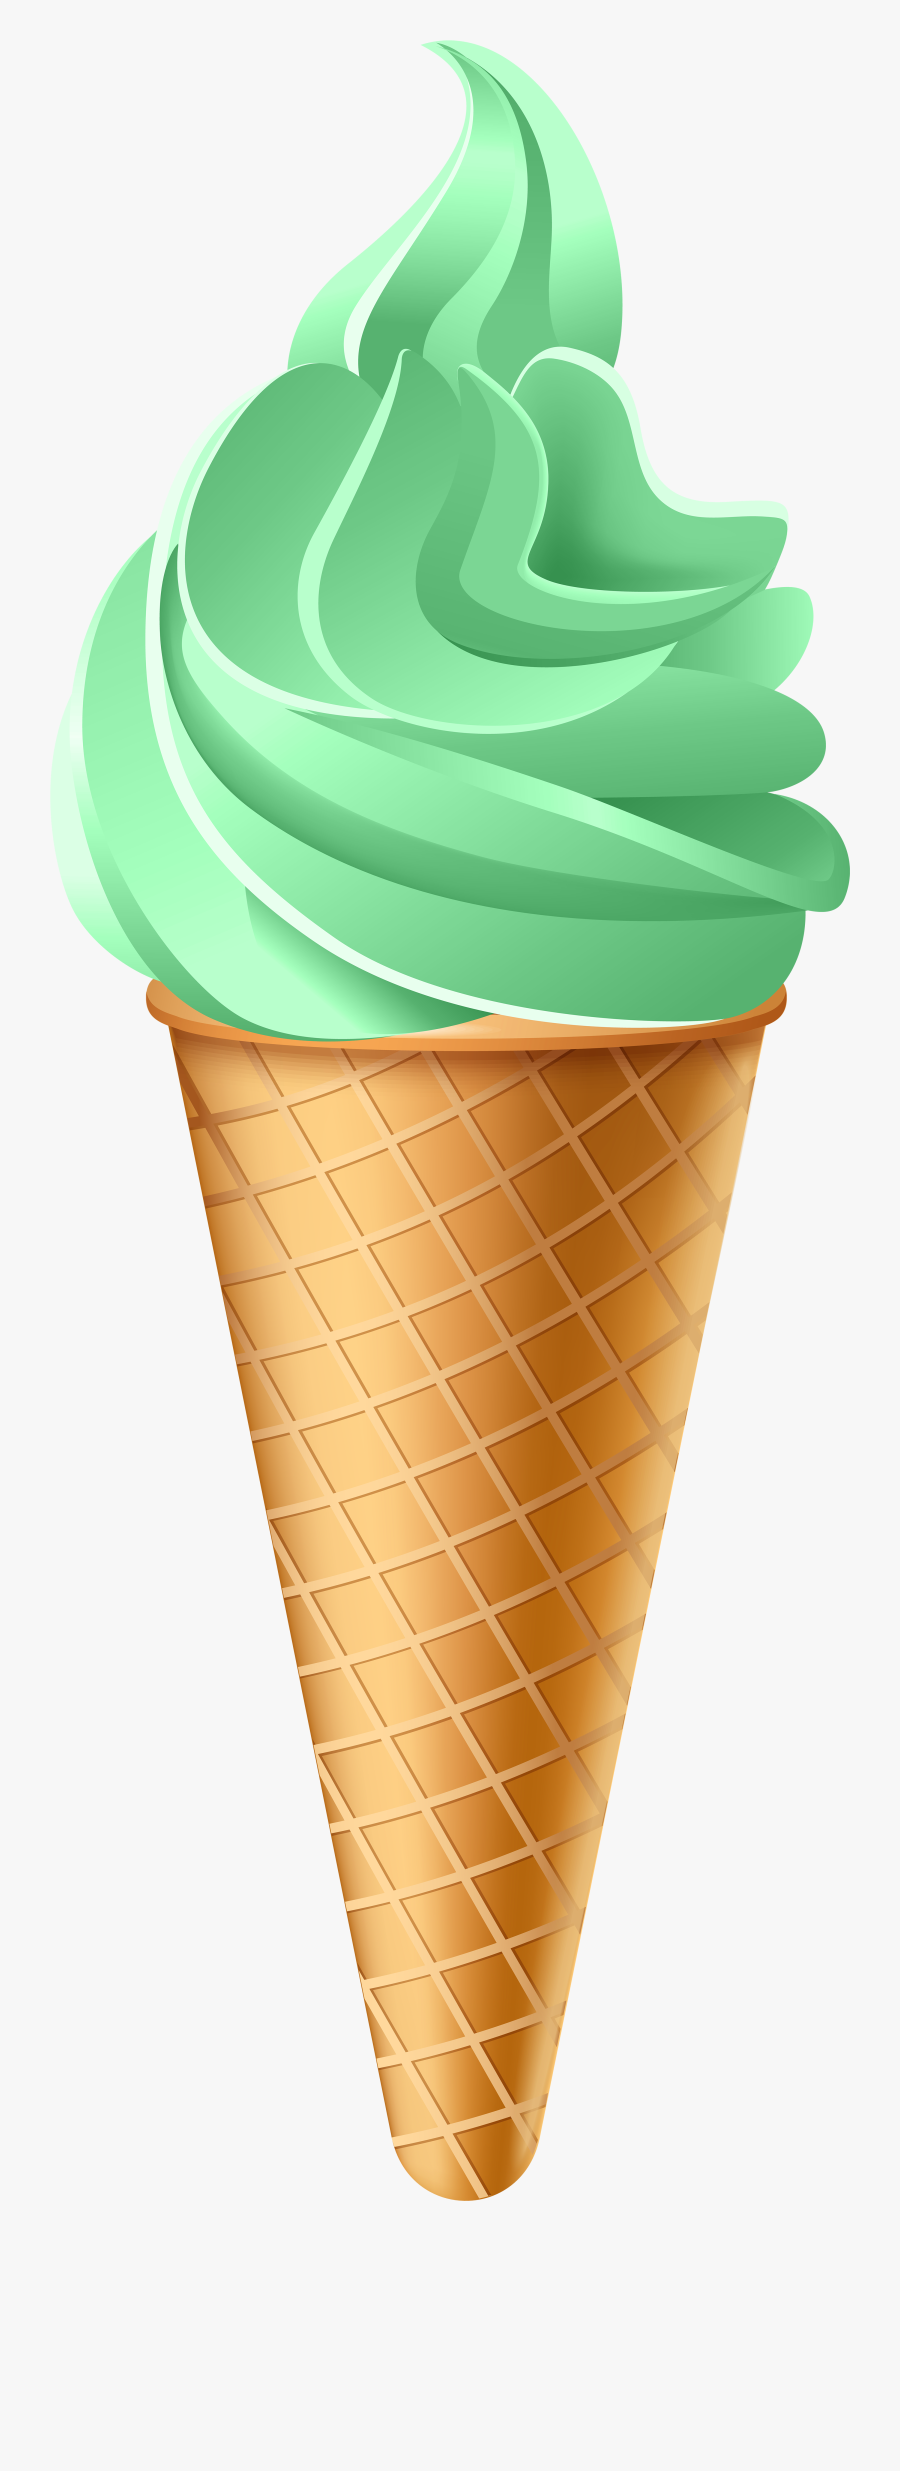 Transparent Ice Cream Png - Mint Ice Cream Clipart, Transparent Clipart